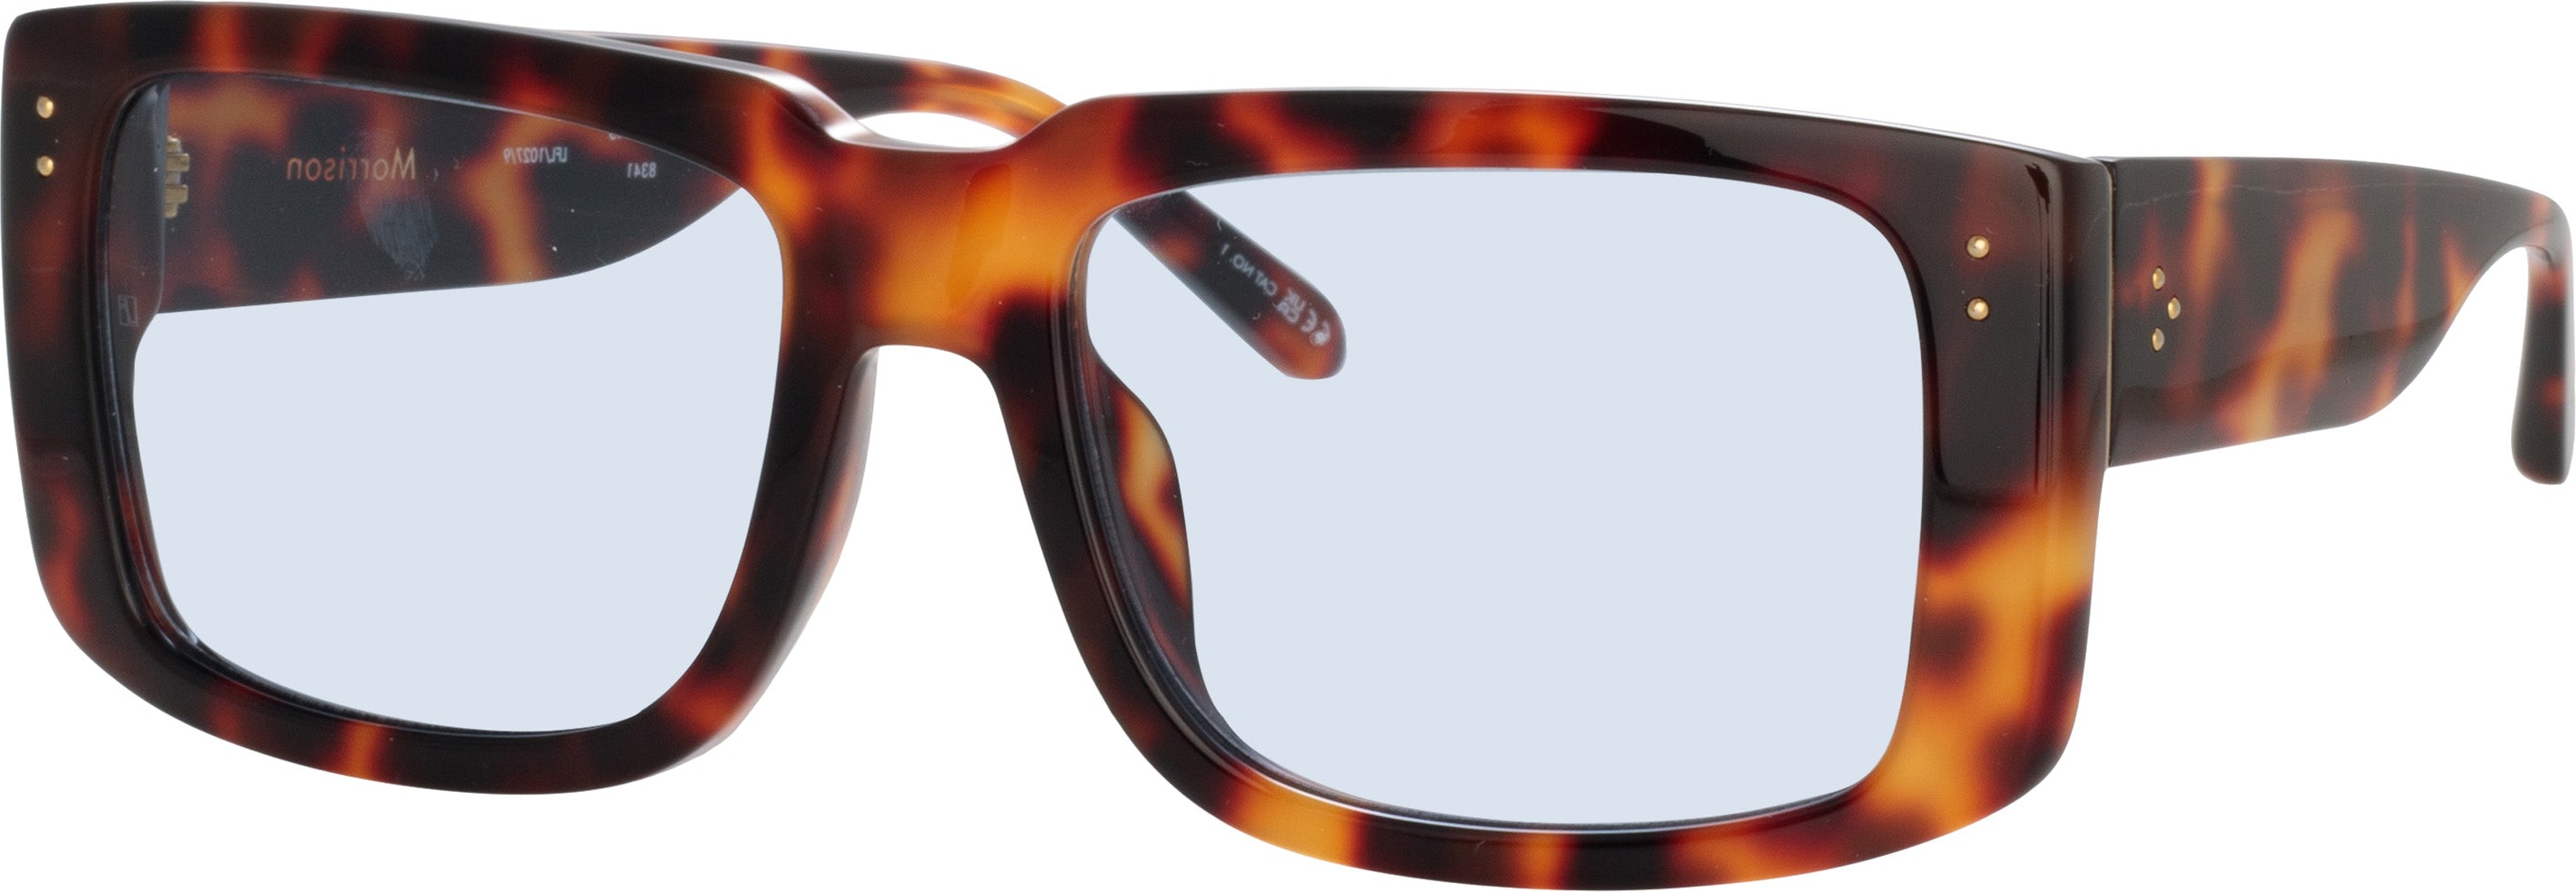 Color_LFL1027C9SUN - Morrison Rectangular Sunglasses in Tortoiseshell and Blue